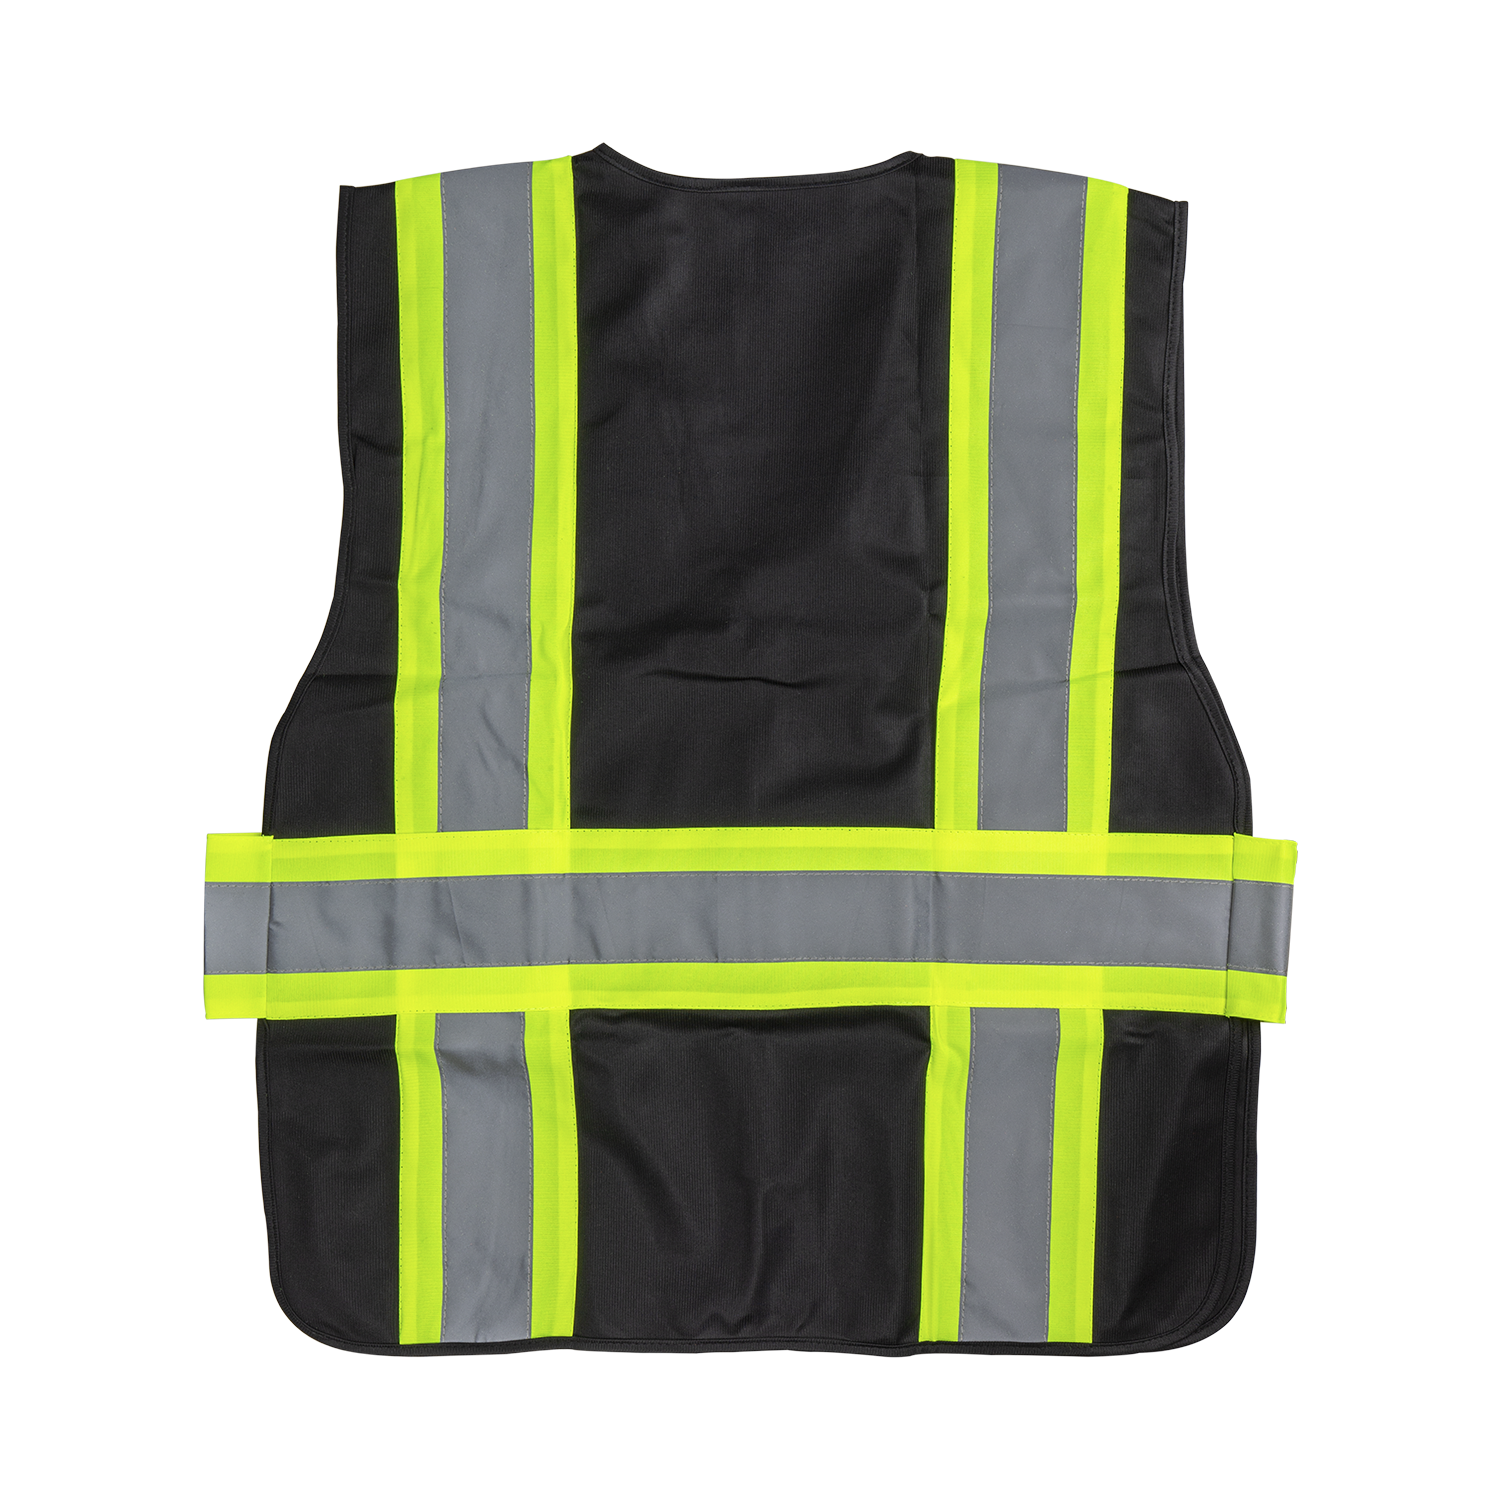 Karat High Visibility Reflective Safety Vest with Zipper Fastening (Black), X-Large - 1 pc